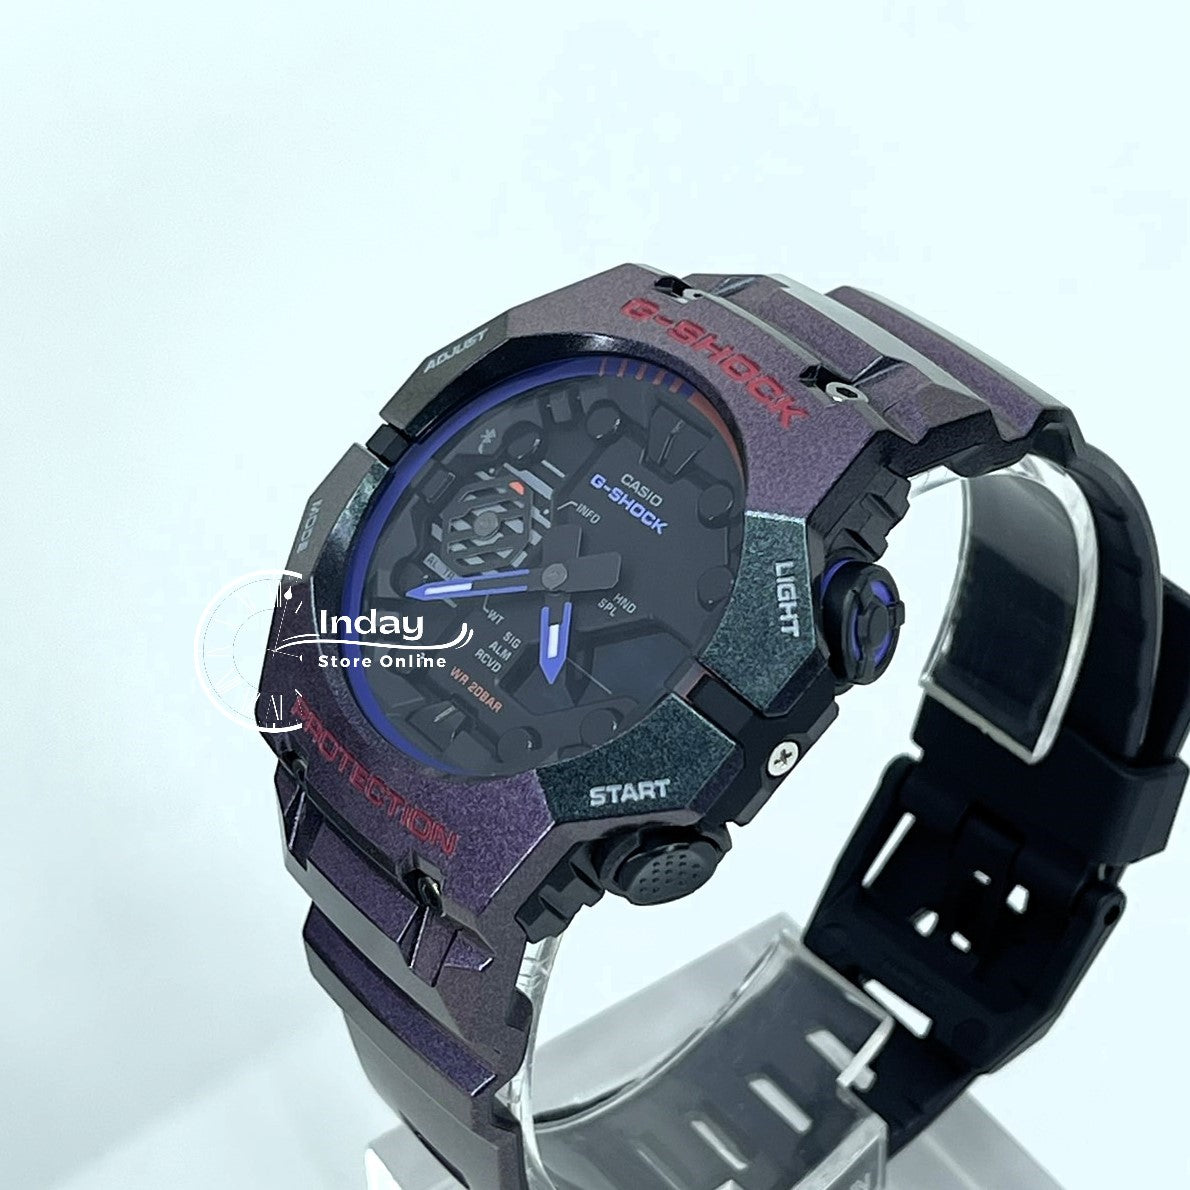 Casio G-Shock Men's Watch GA-B001AH-6A Analog-Digital GA-B001 Series New Arrival Shock Resistant Carbon Core Guard Structure